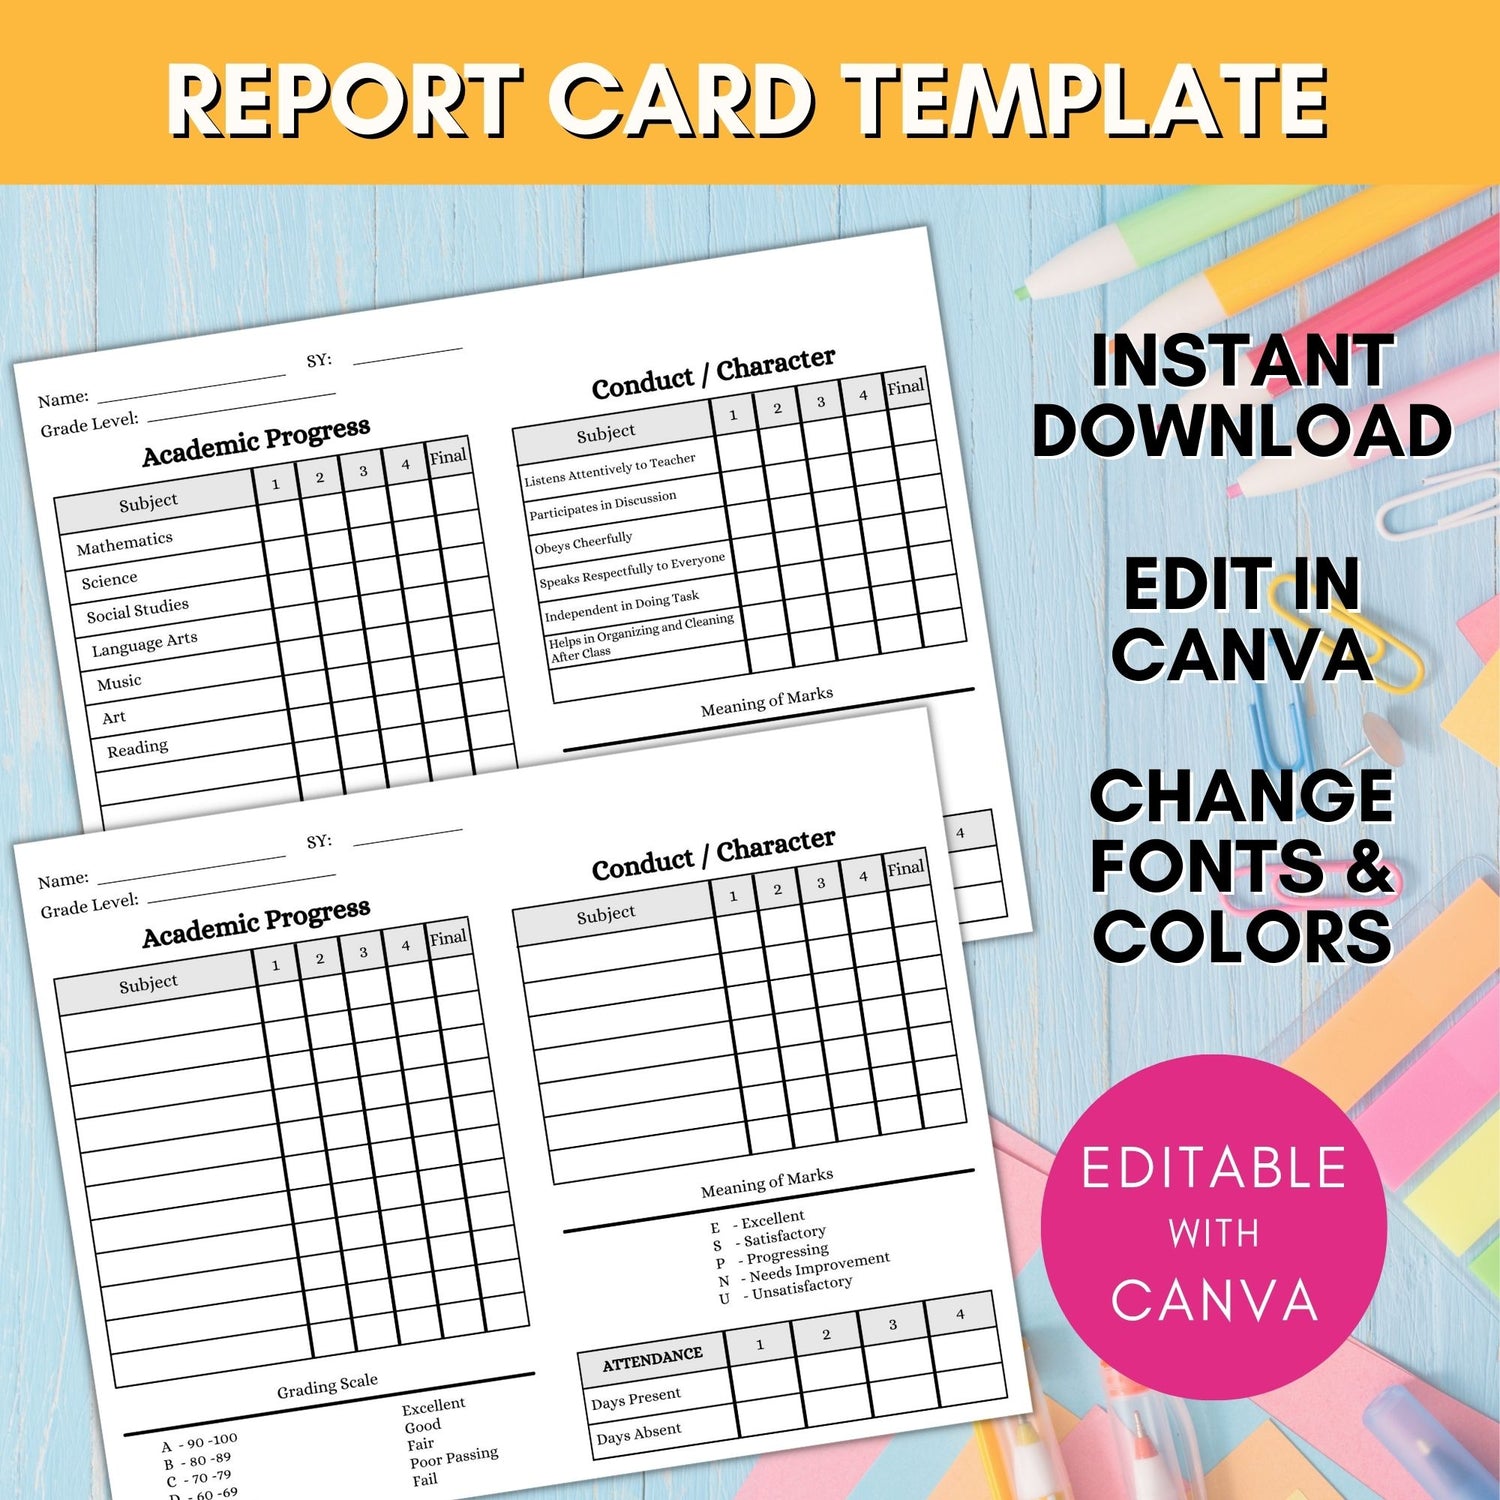 Editable Homeschool Report Card